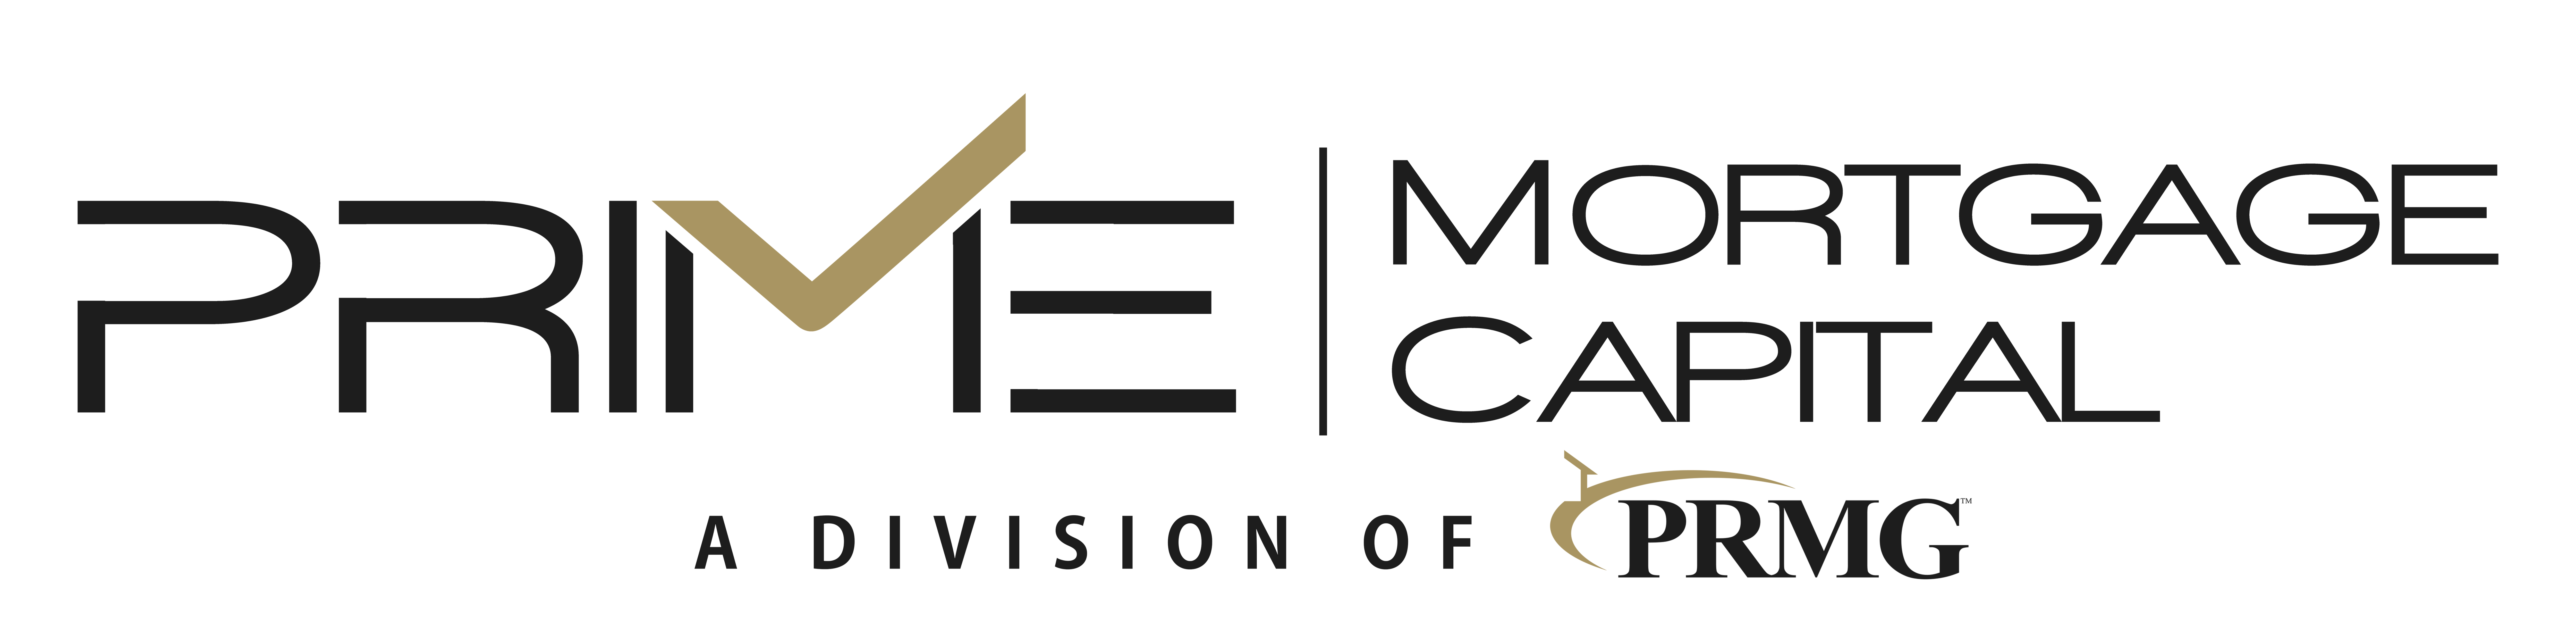 Prime Mortgage Capital - Logo